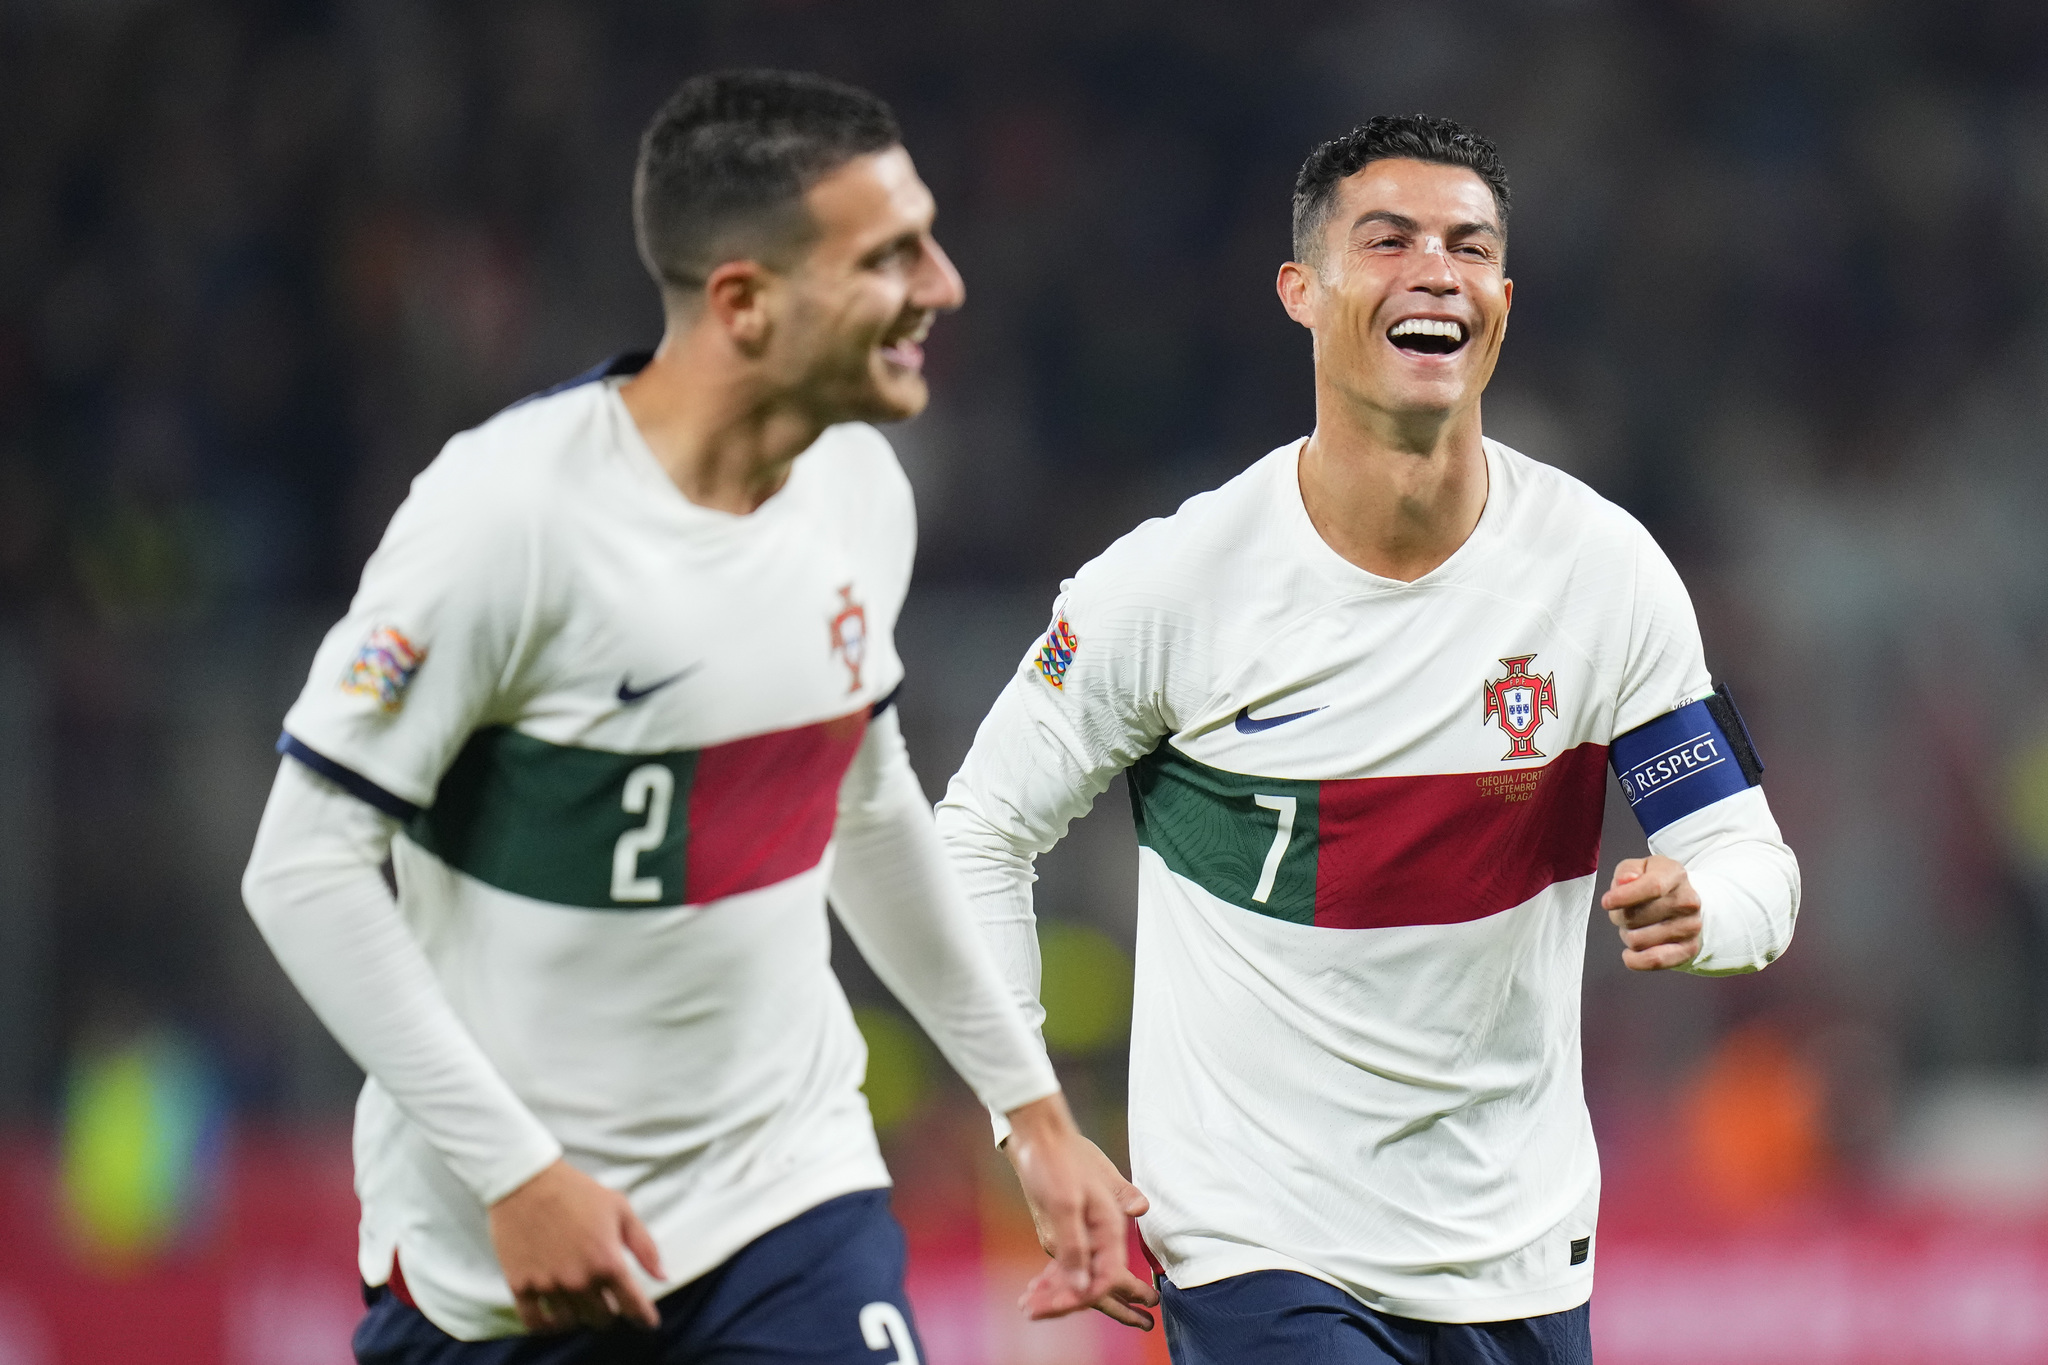 Portugal's Diogo Dalot, who scored his side's third goal, celebrates with Cristiano Ronaldo